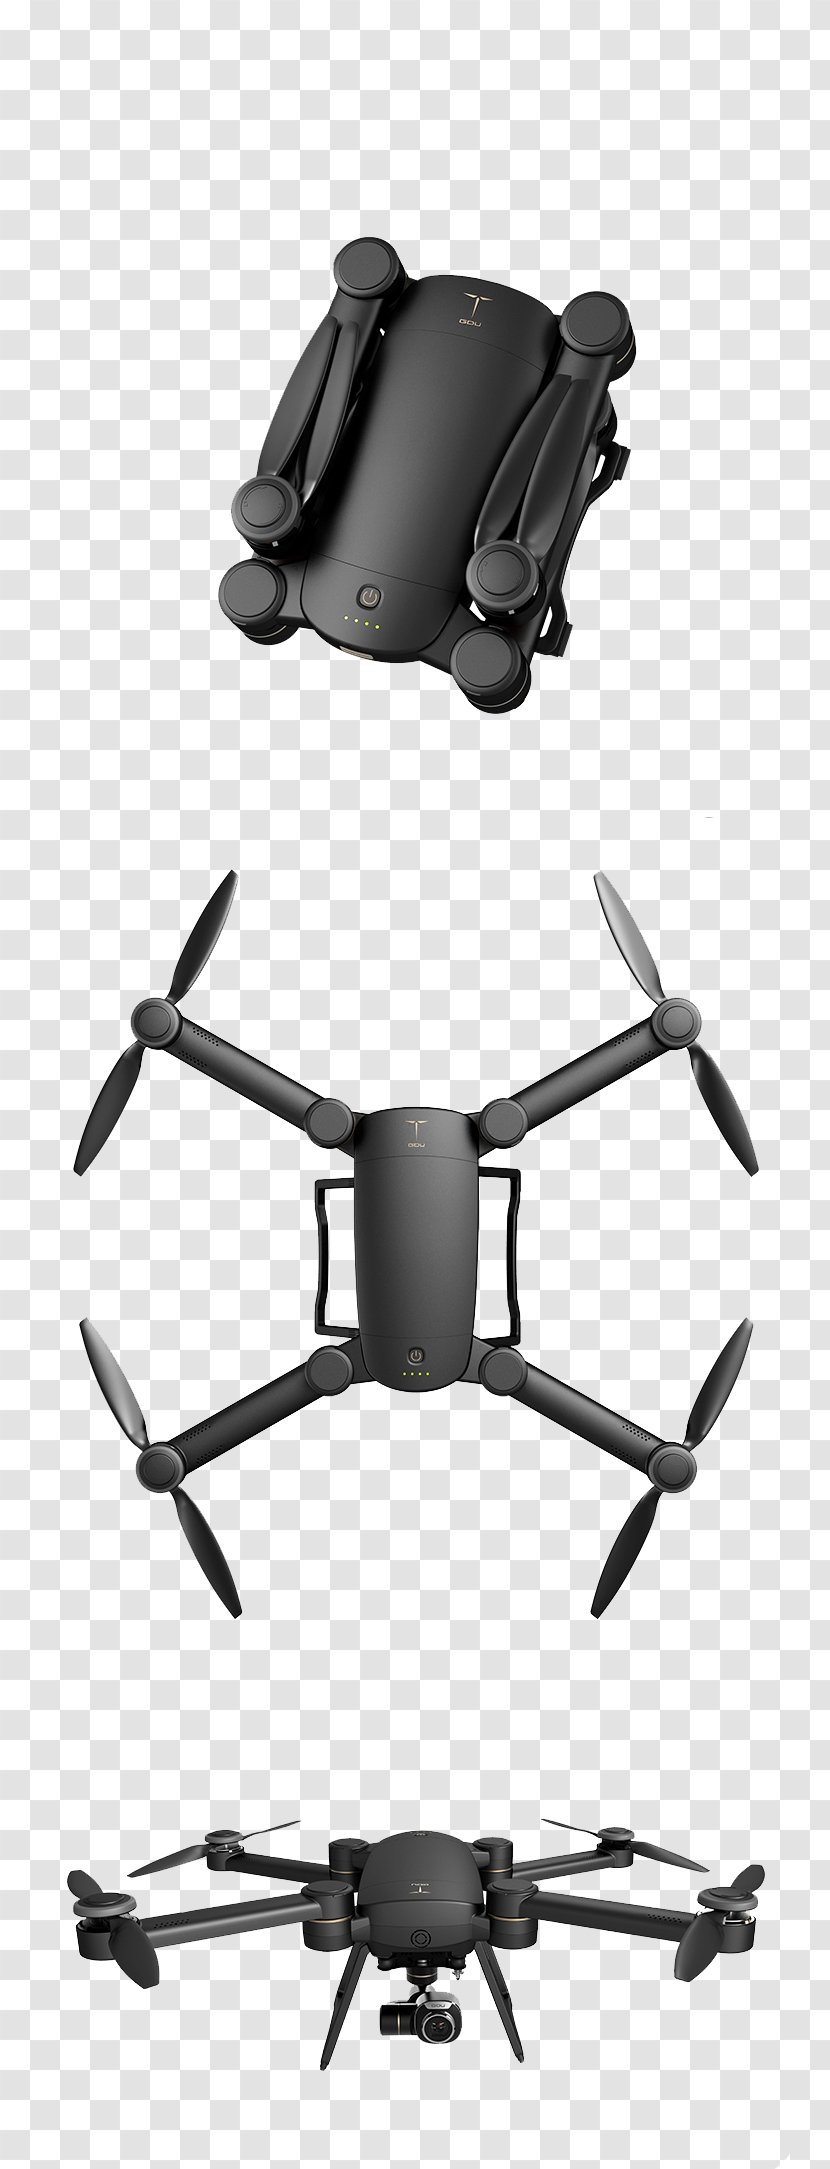 Unmanned Aerial Vehicle Quadcopter 4K Resolution Camera Gimbal - Helicopter - UAV Transparent PNG